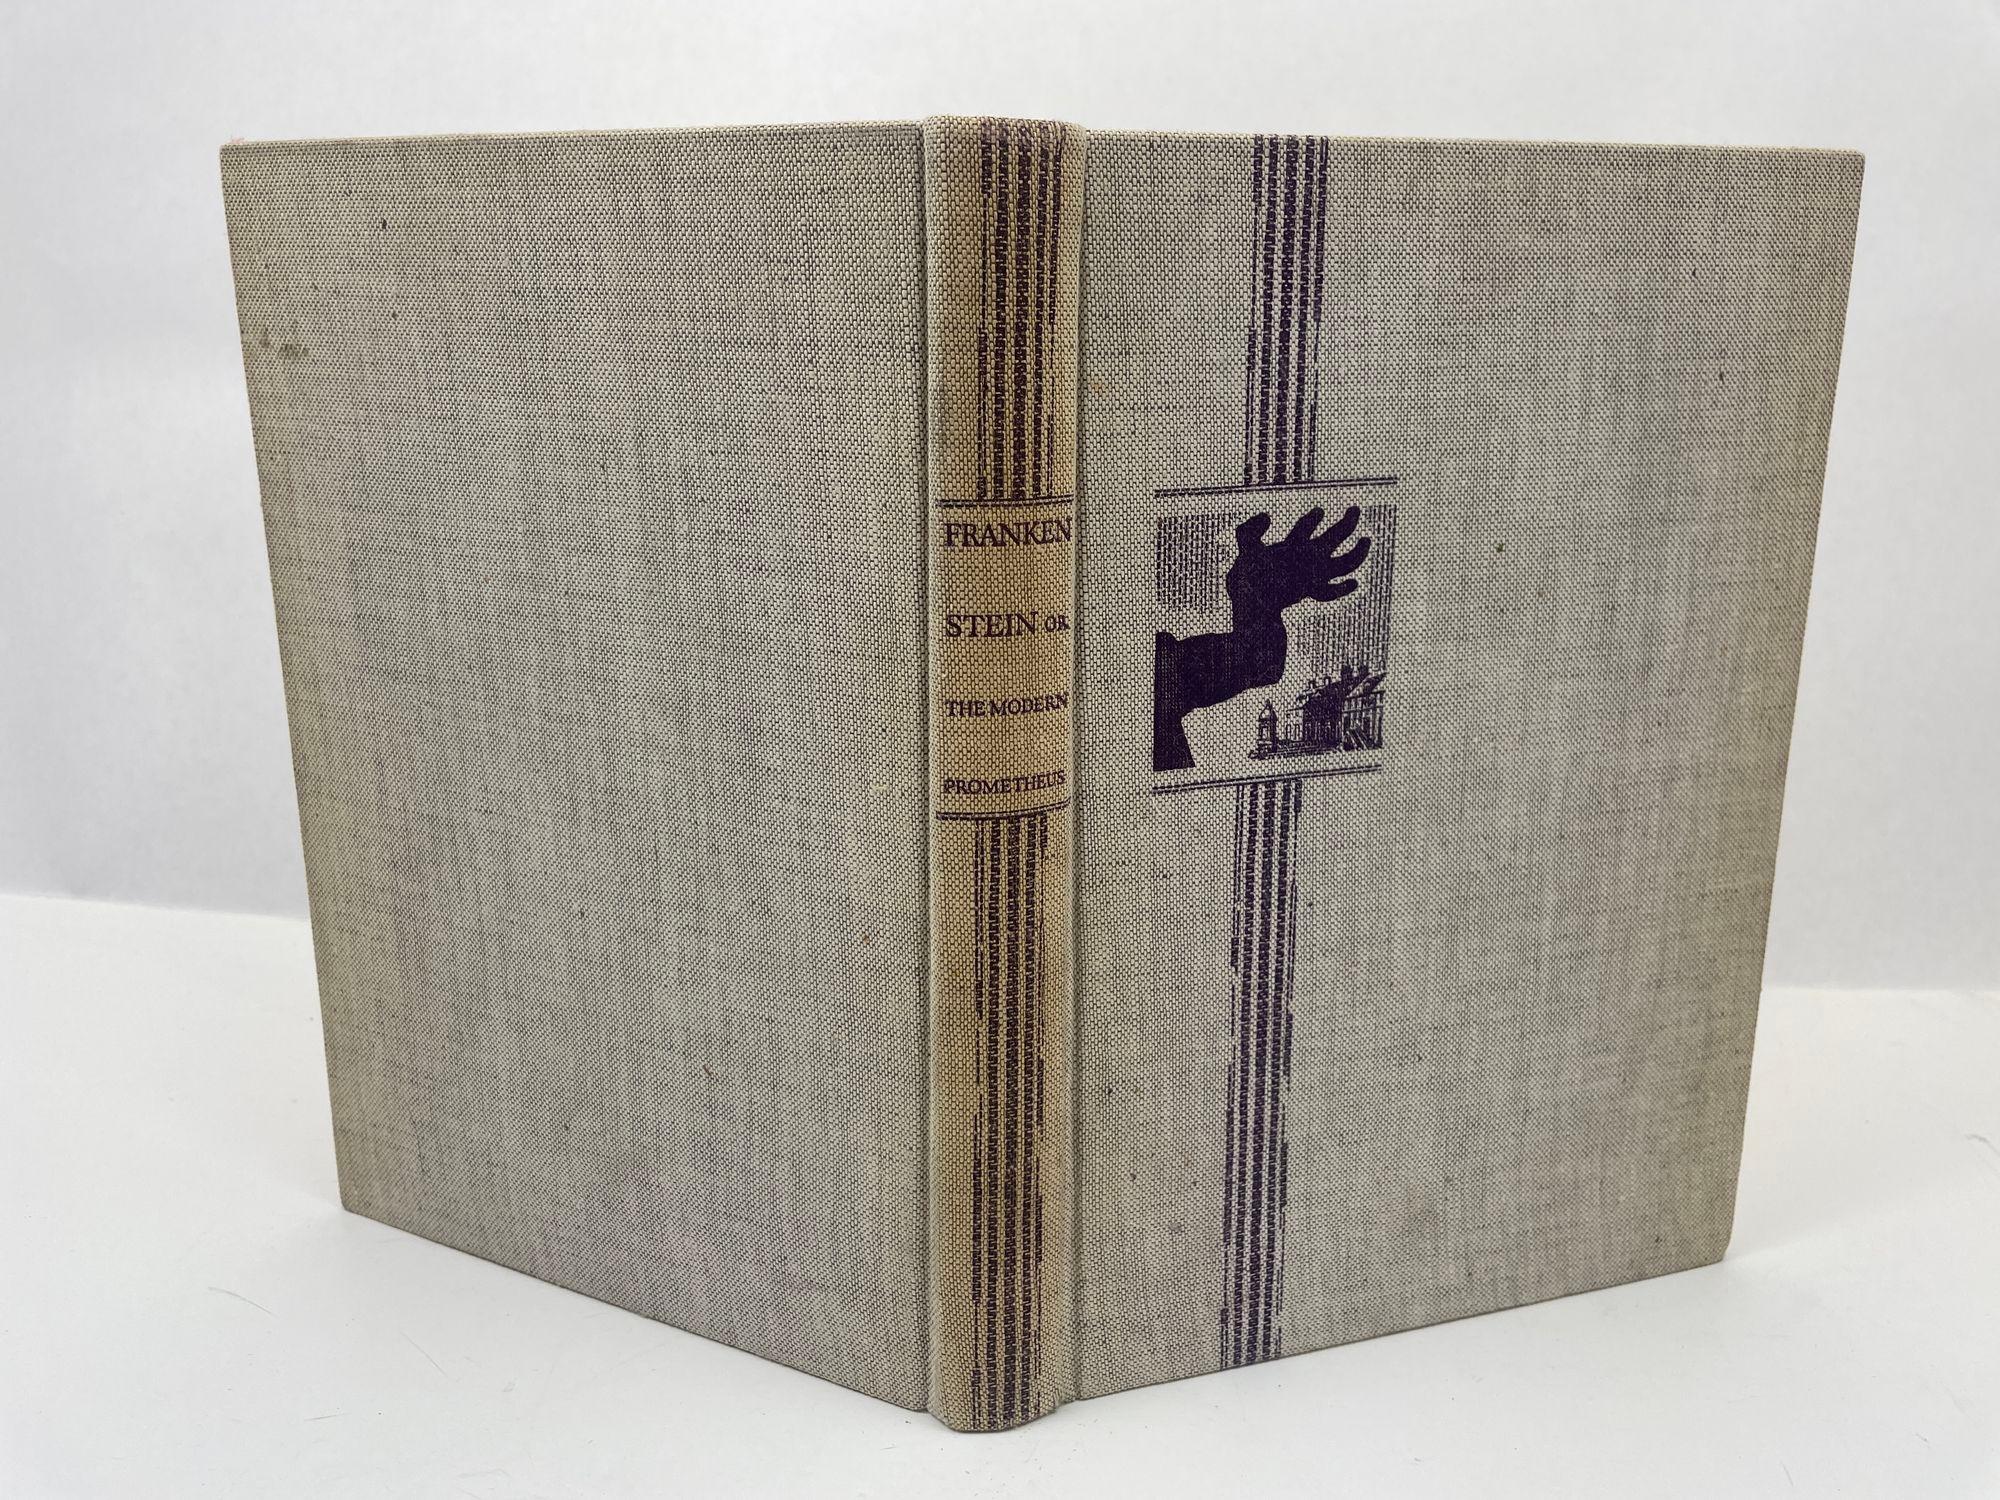 Folk Art Frankenstein or the Modern Prometheus Hardcover Book 1950 Edition For Sale